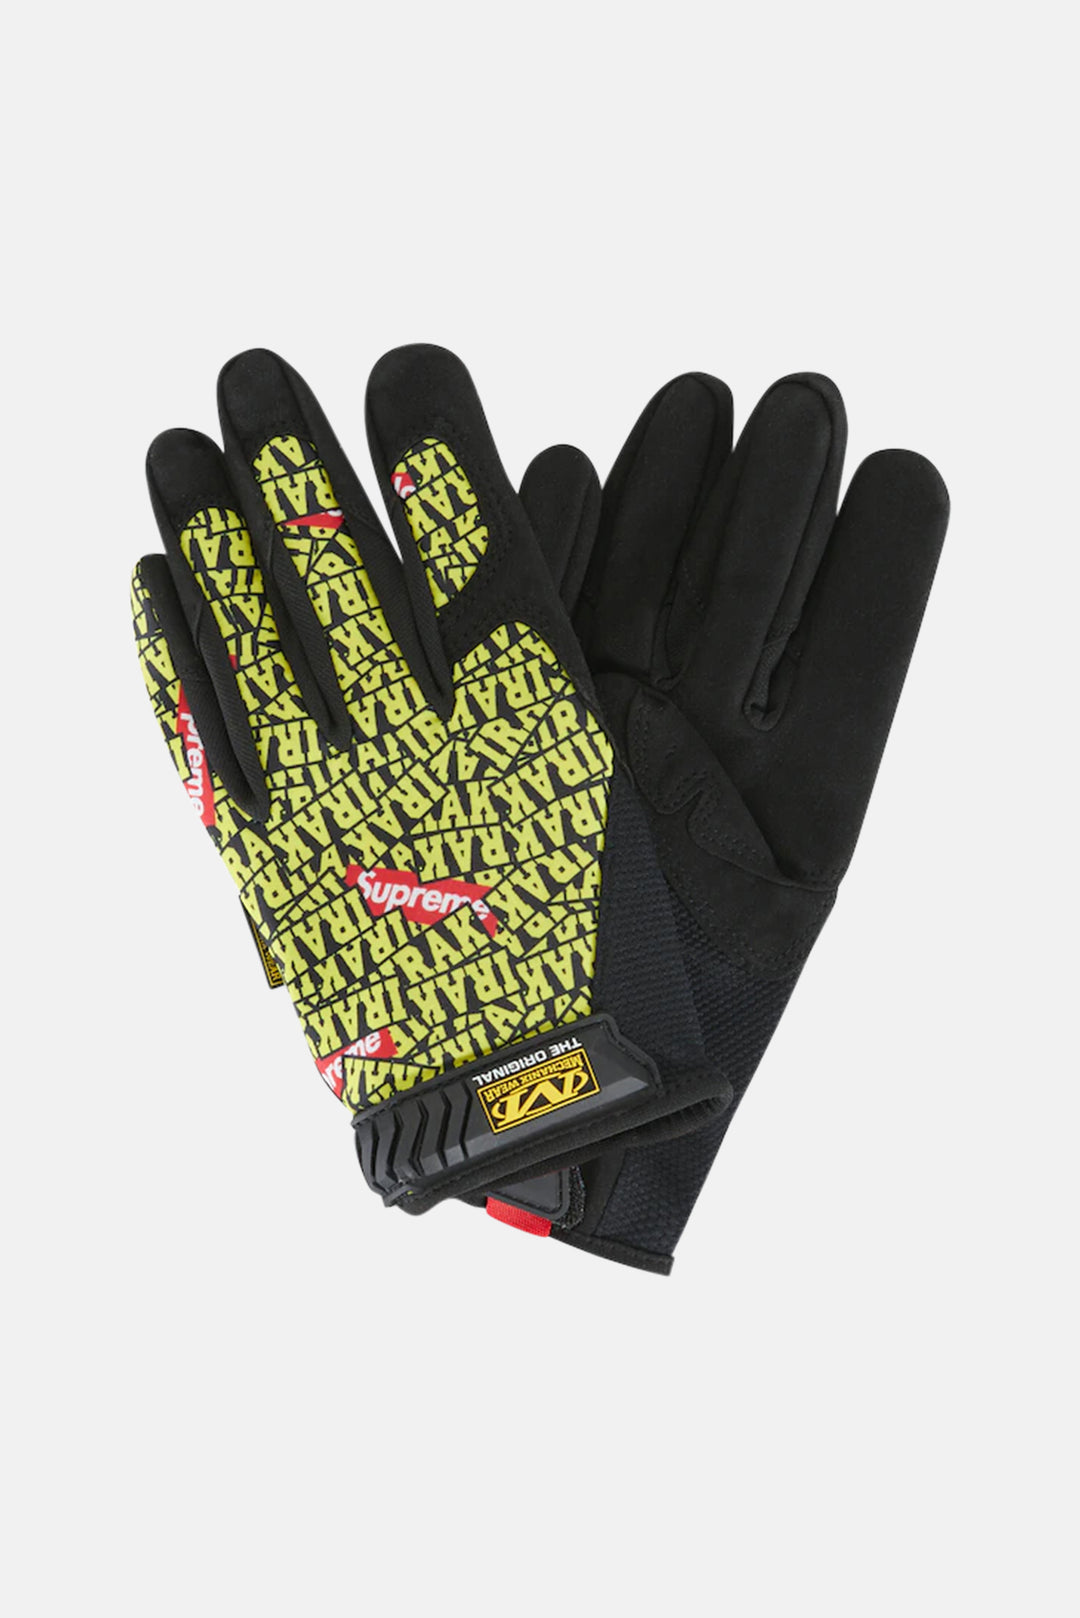 IRAK X Mechanix Work Gloves Black/Yellow